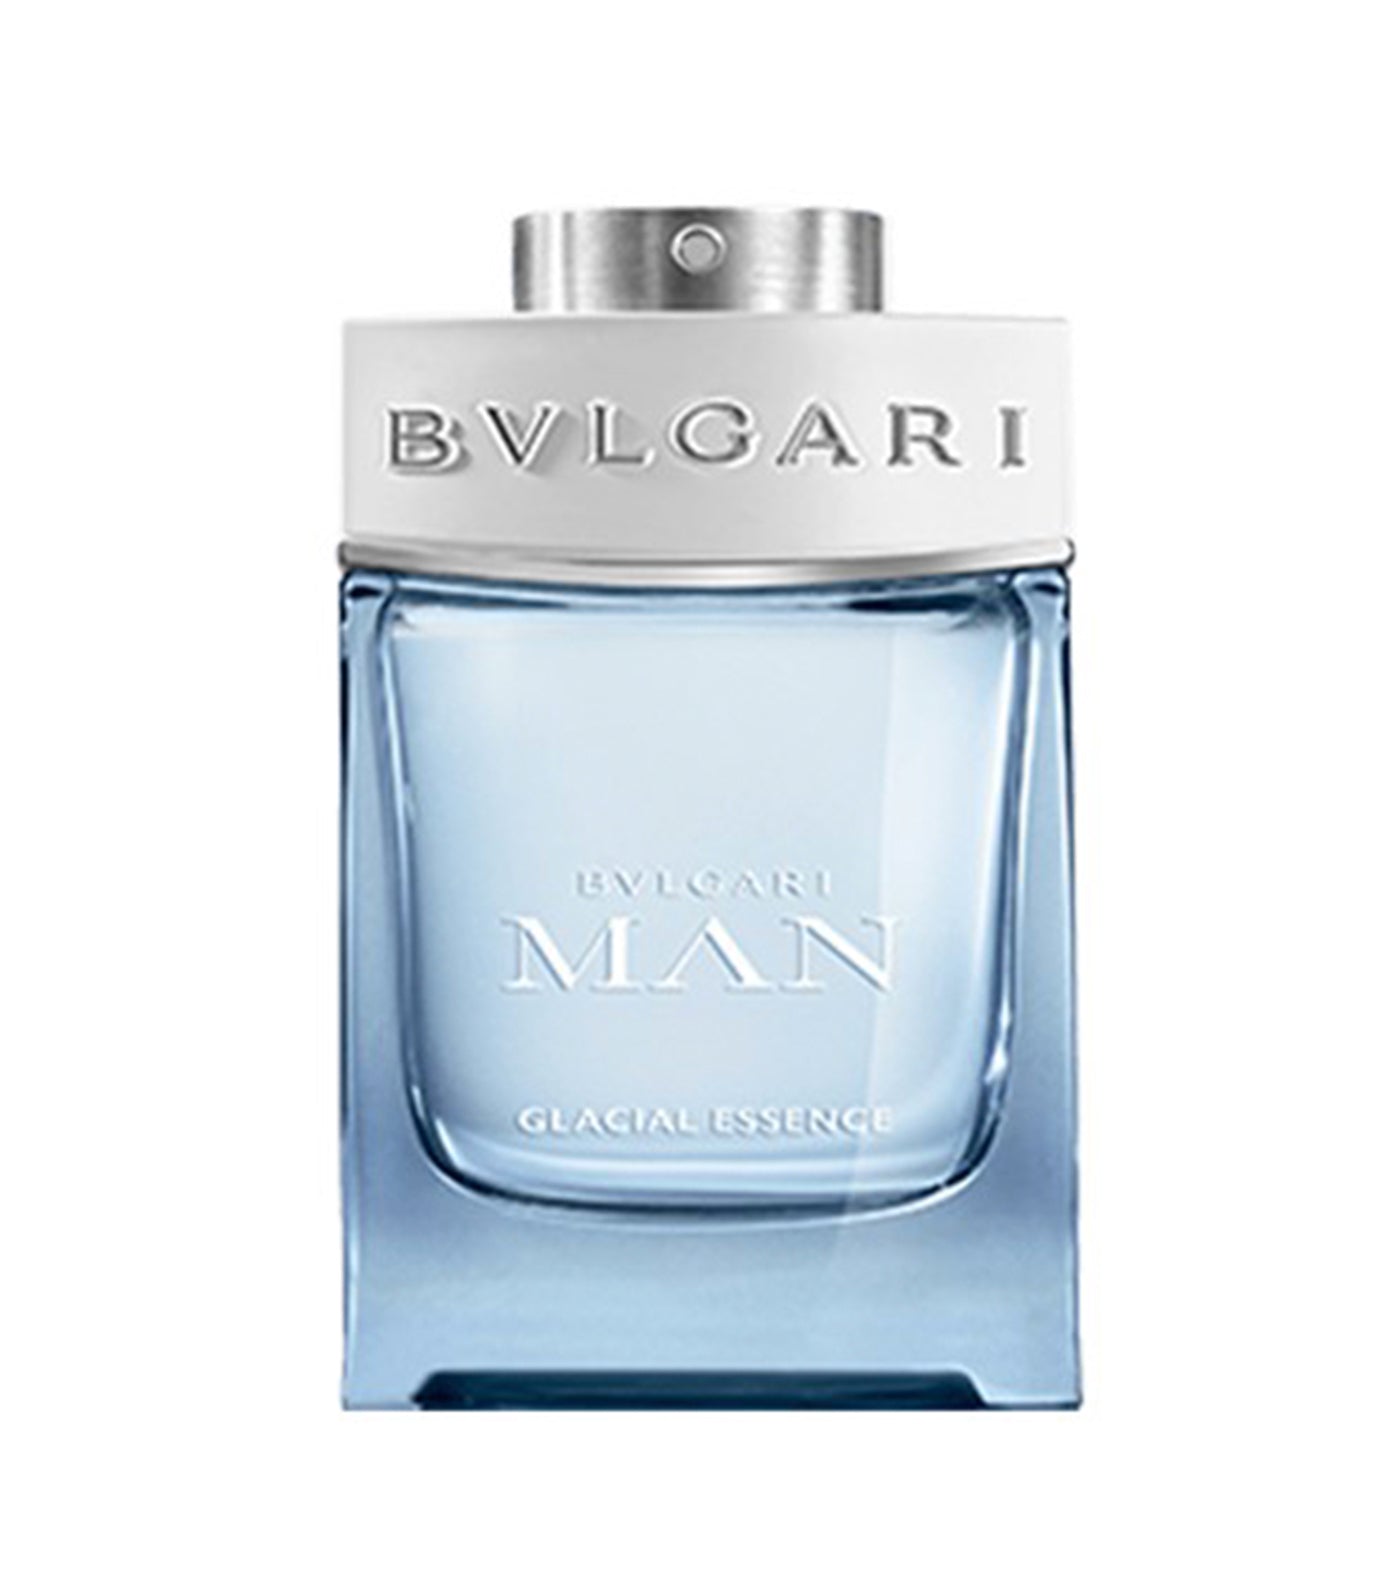 Bvlgari Man Glacial Essence Eau De Parfum by Bvlgari 60ml